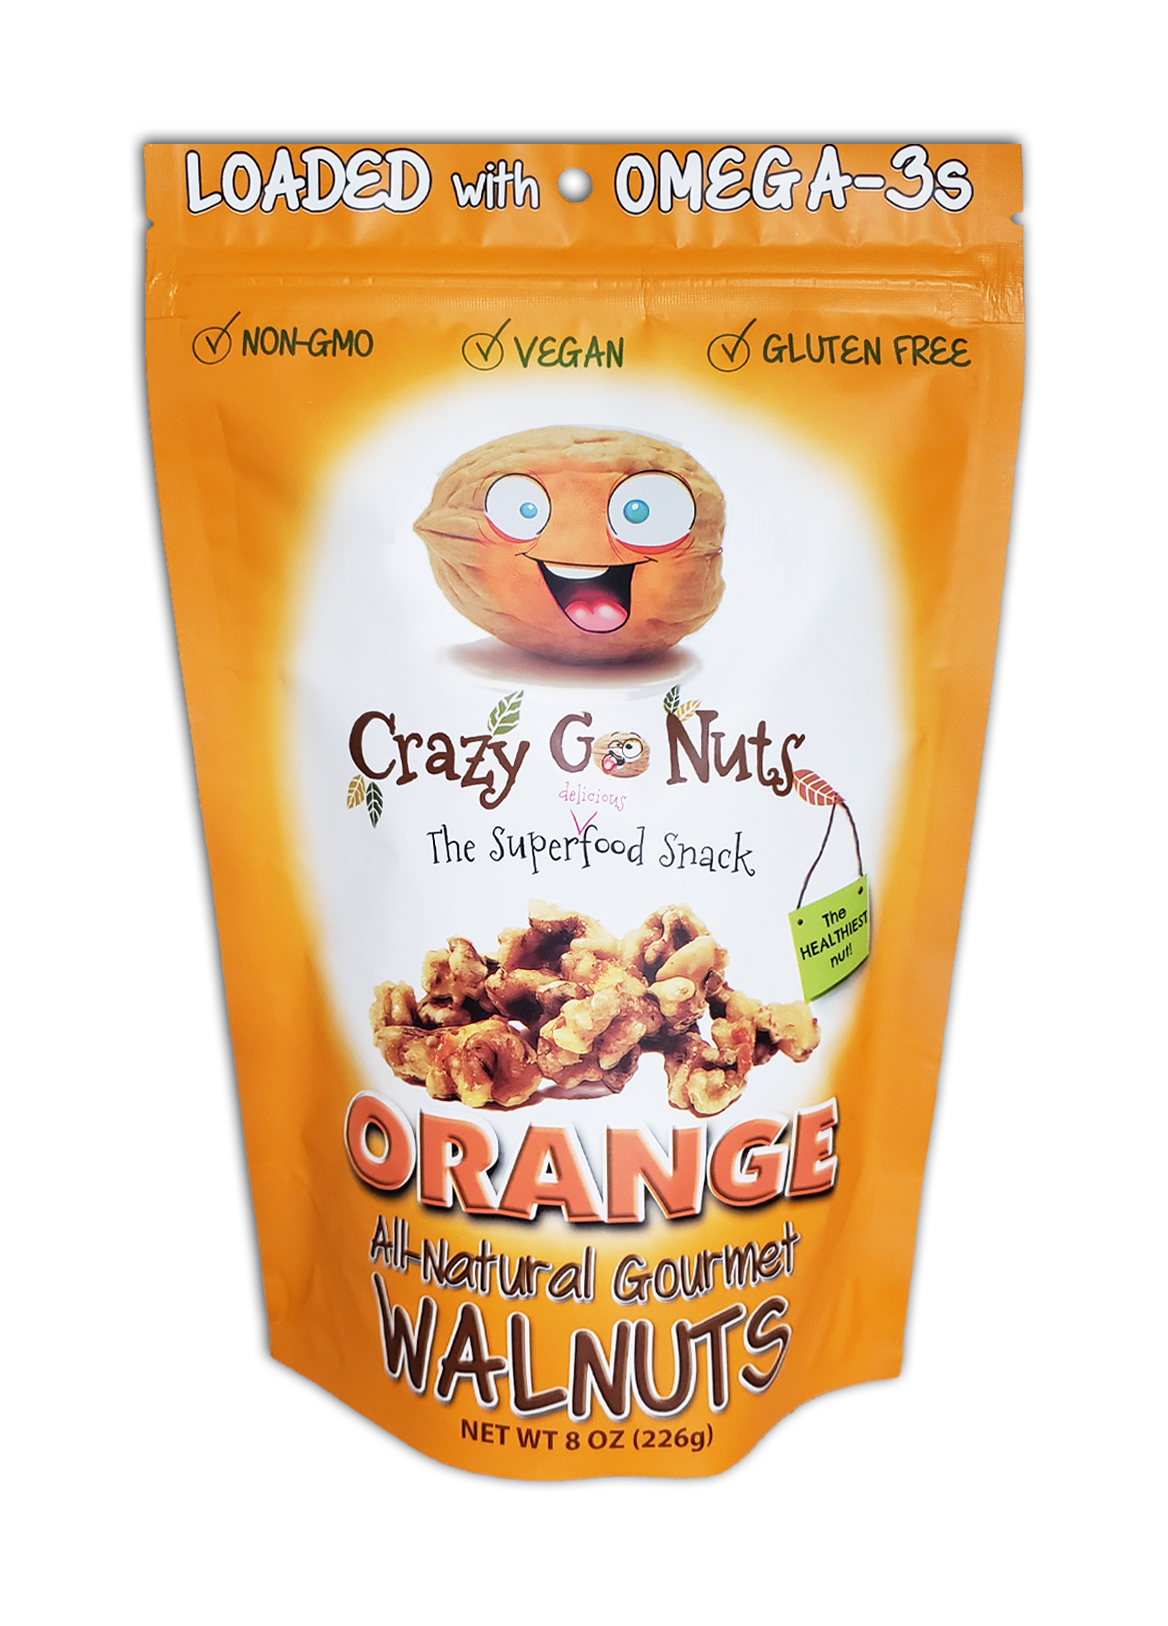 A bag of orange coated walnut snacks